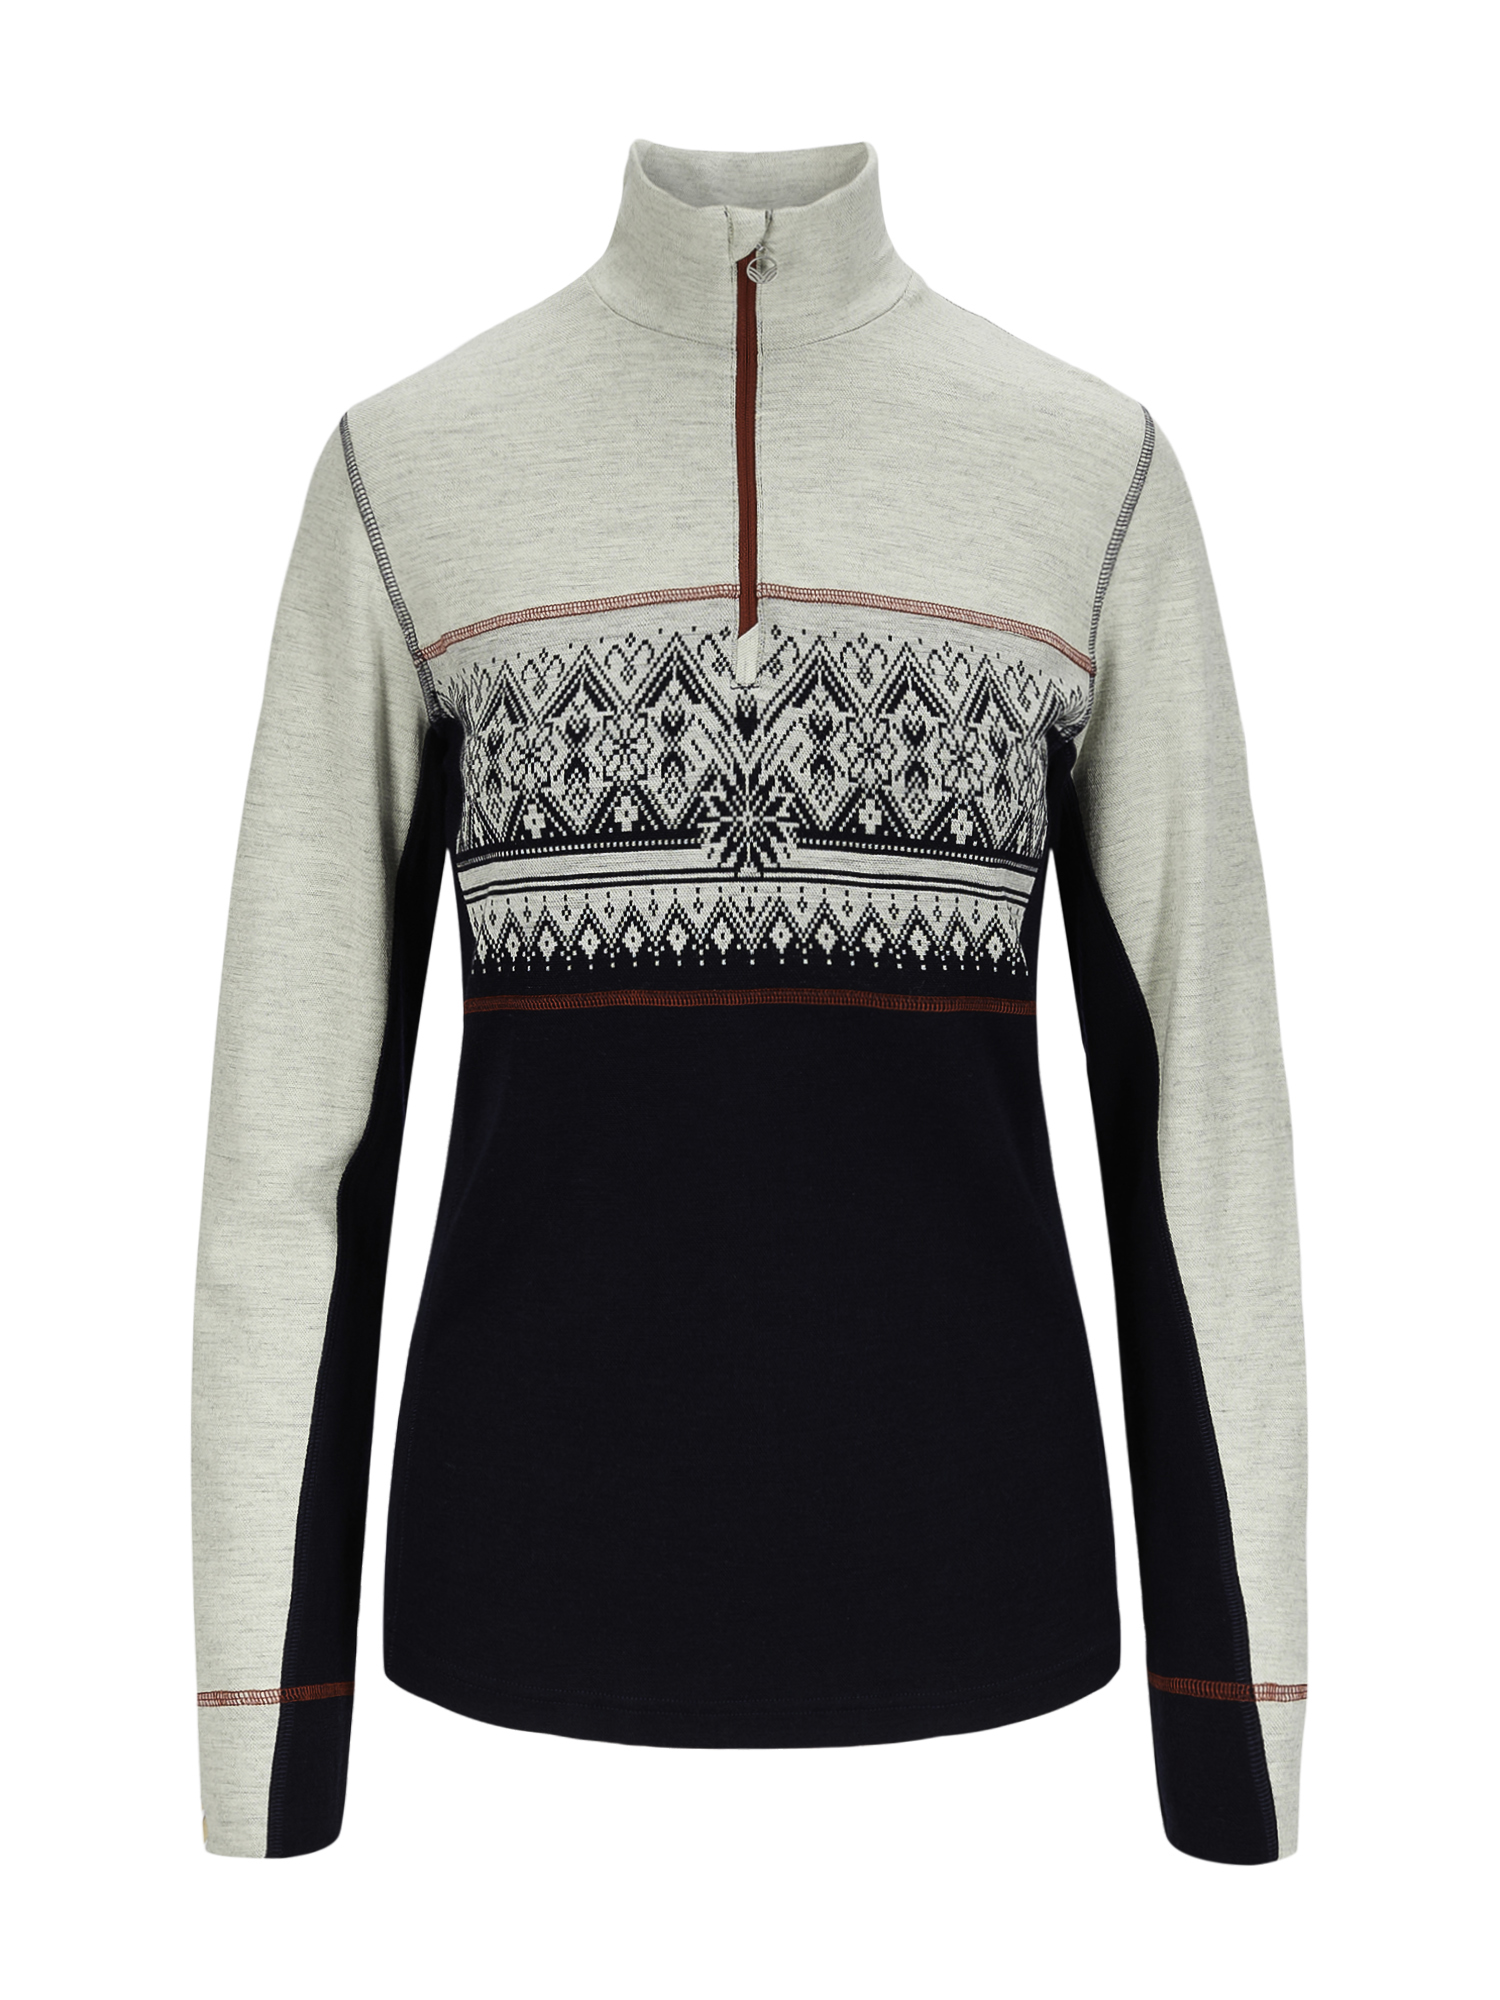 Moritz Basic Sweater - Women - Navy/White - Dale of Norway - Dale